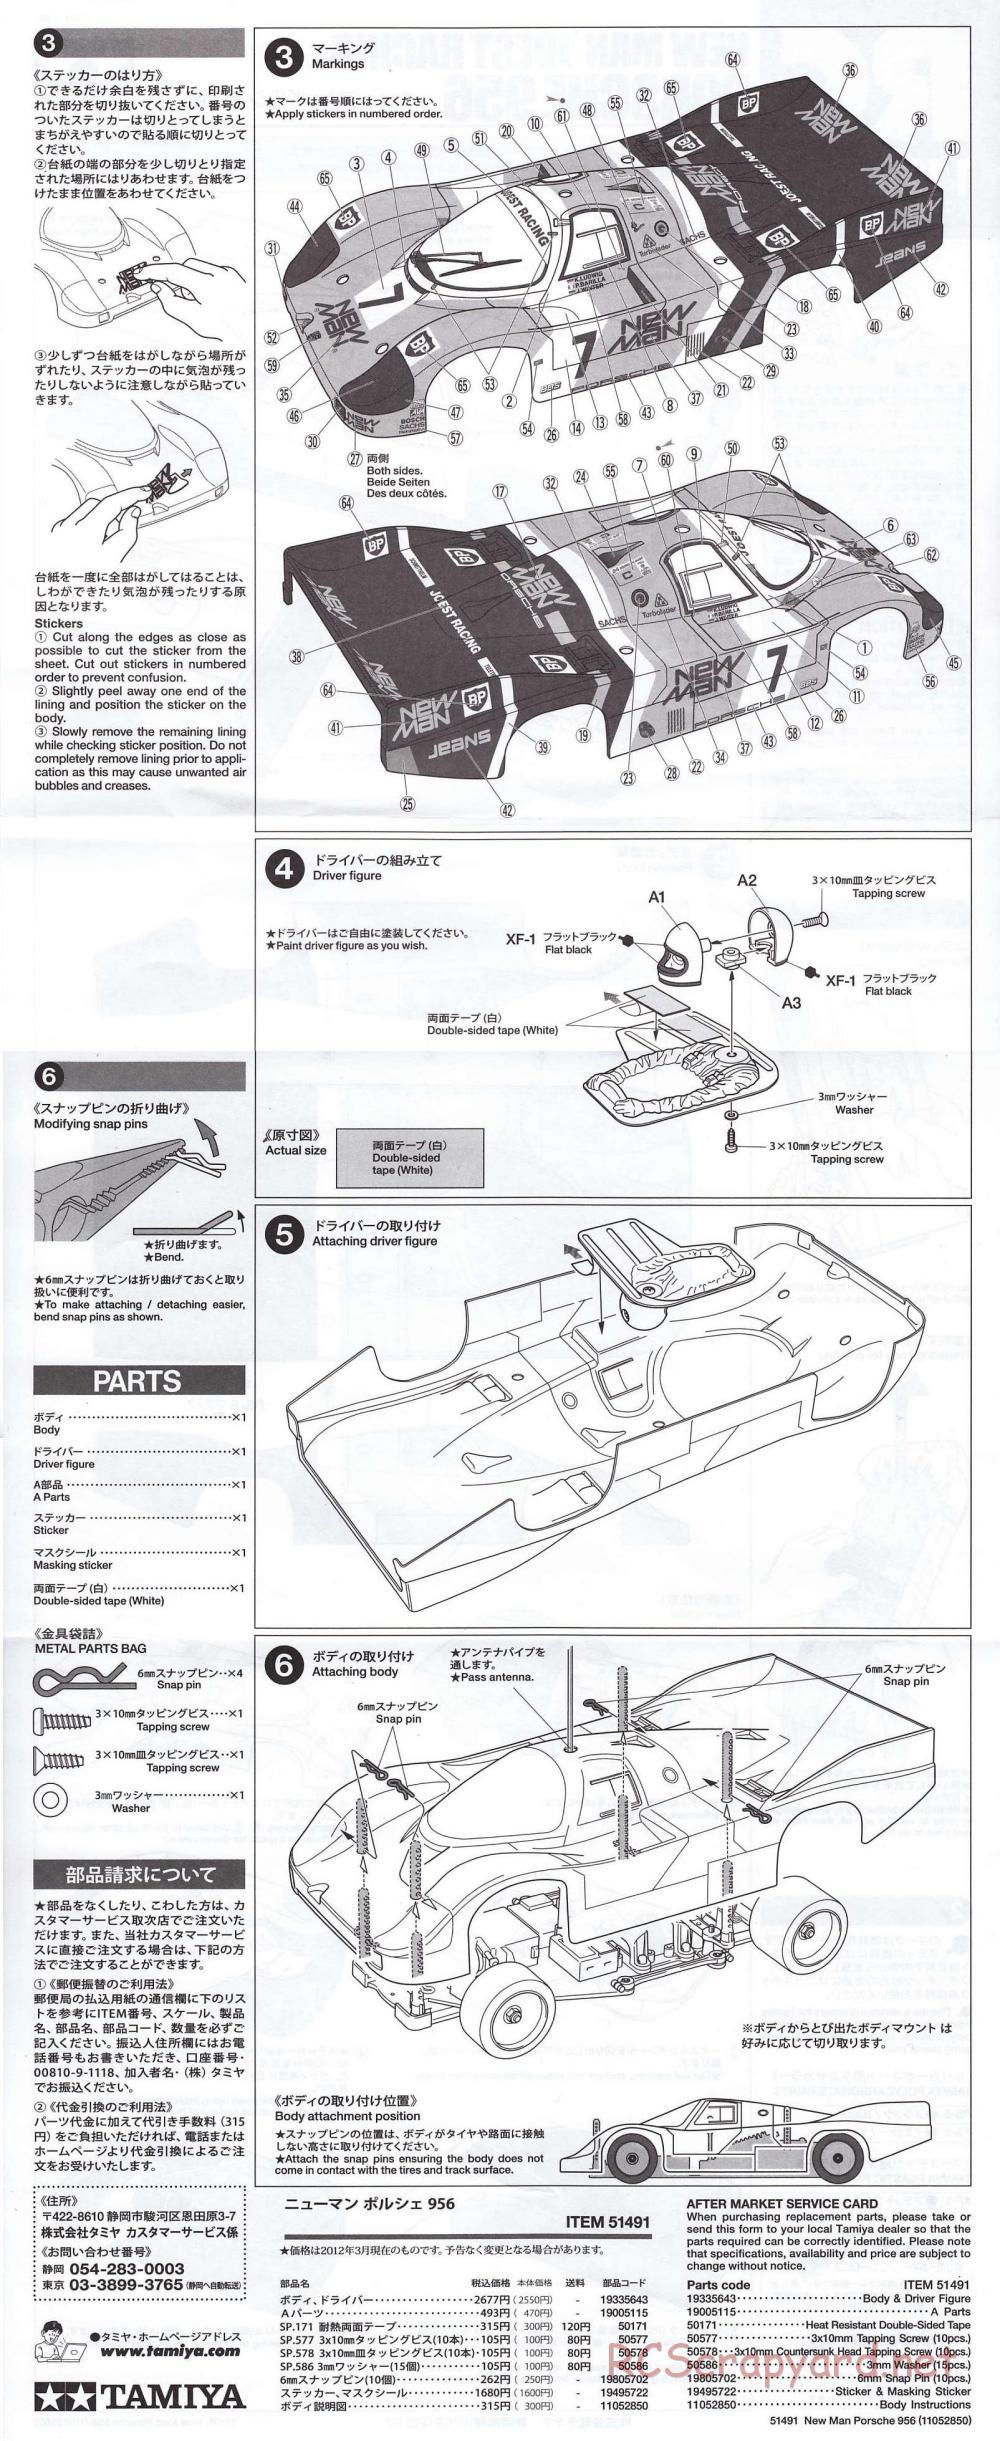 Tamiya - Newman Joest Racing Porsche - RM-01 Chassis - Body Manual - Page 2